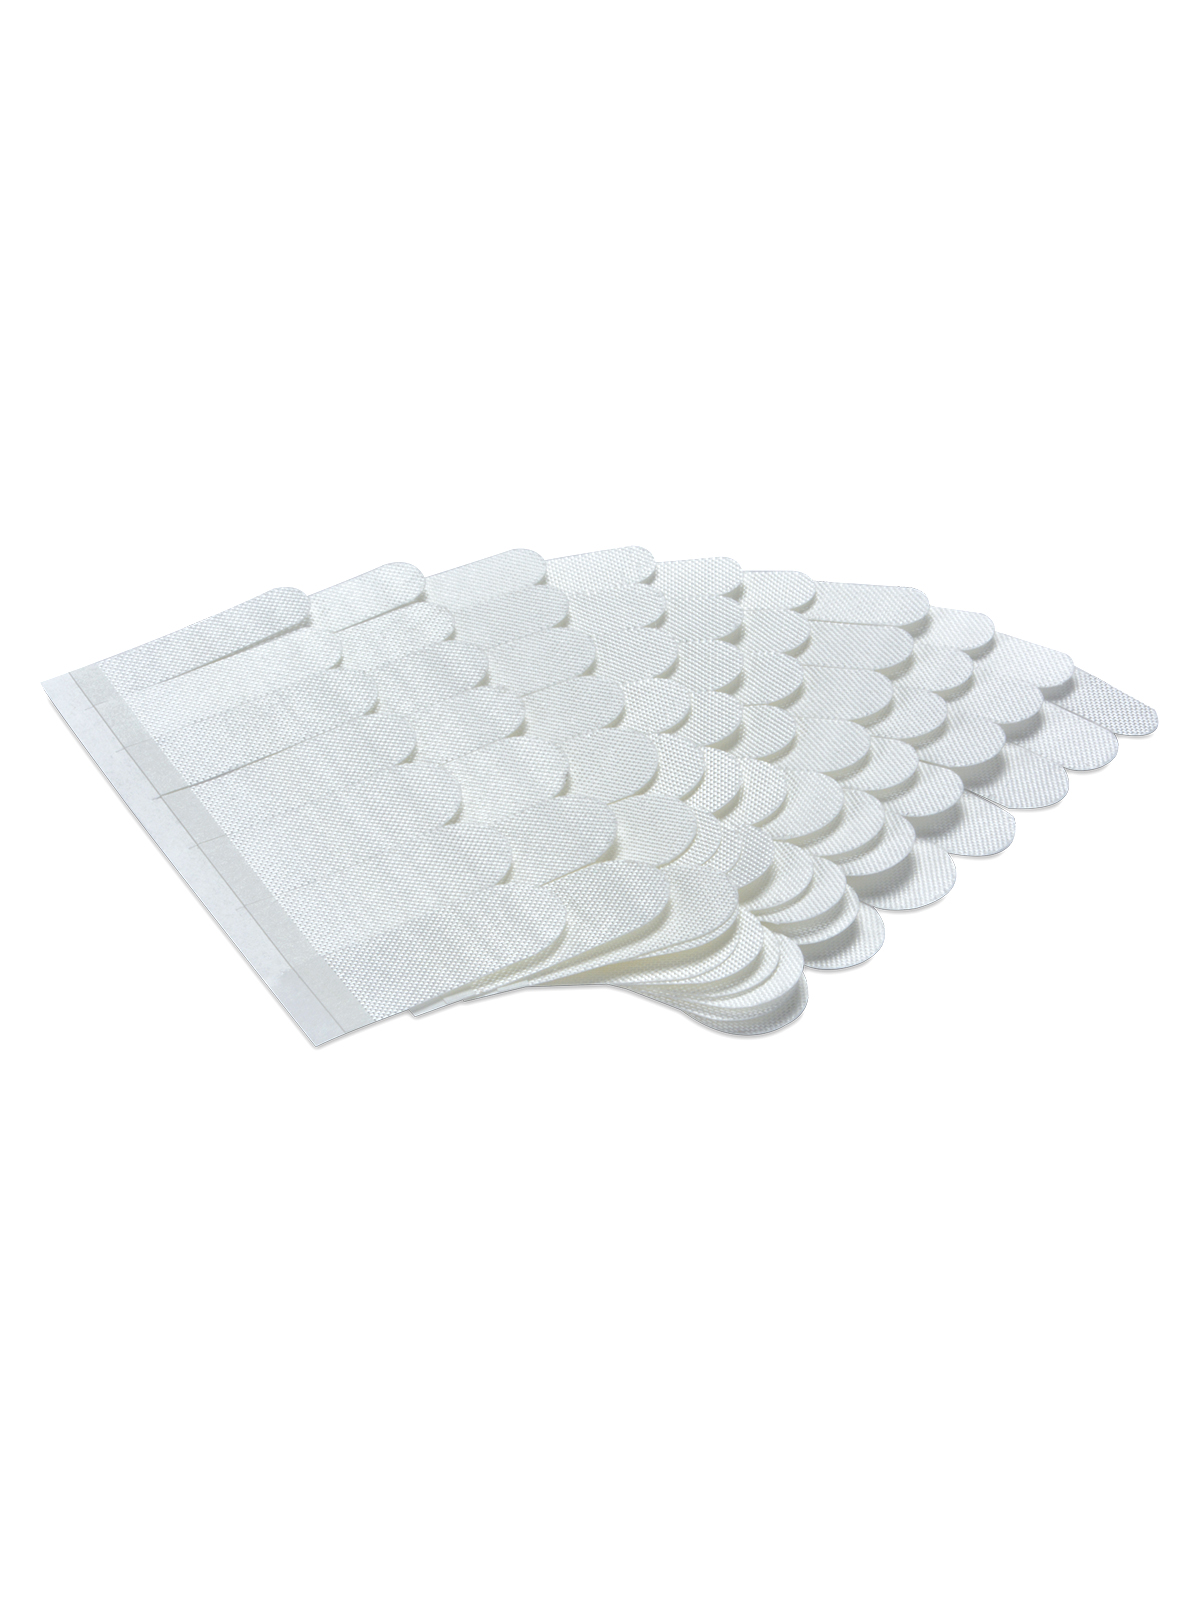 CP505 Fiberglass Silk Finger Wrap Sheets 7sizes